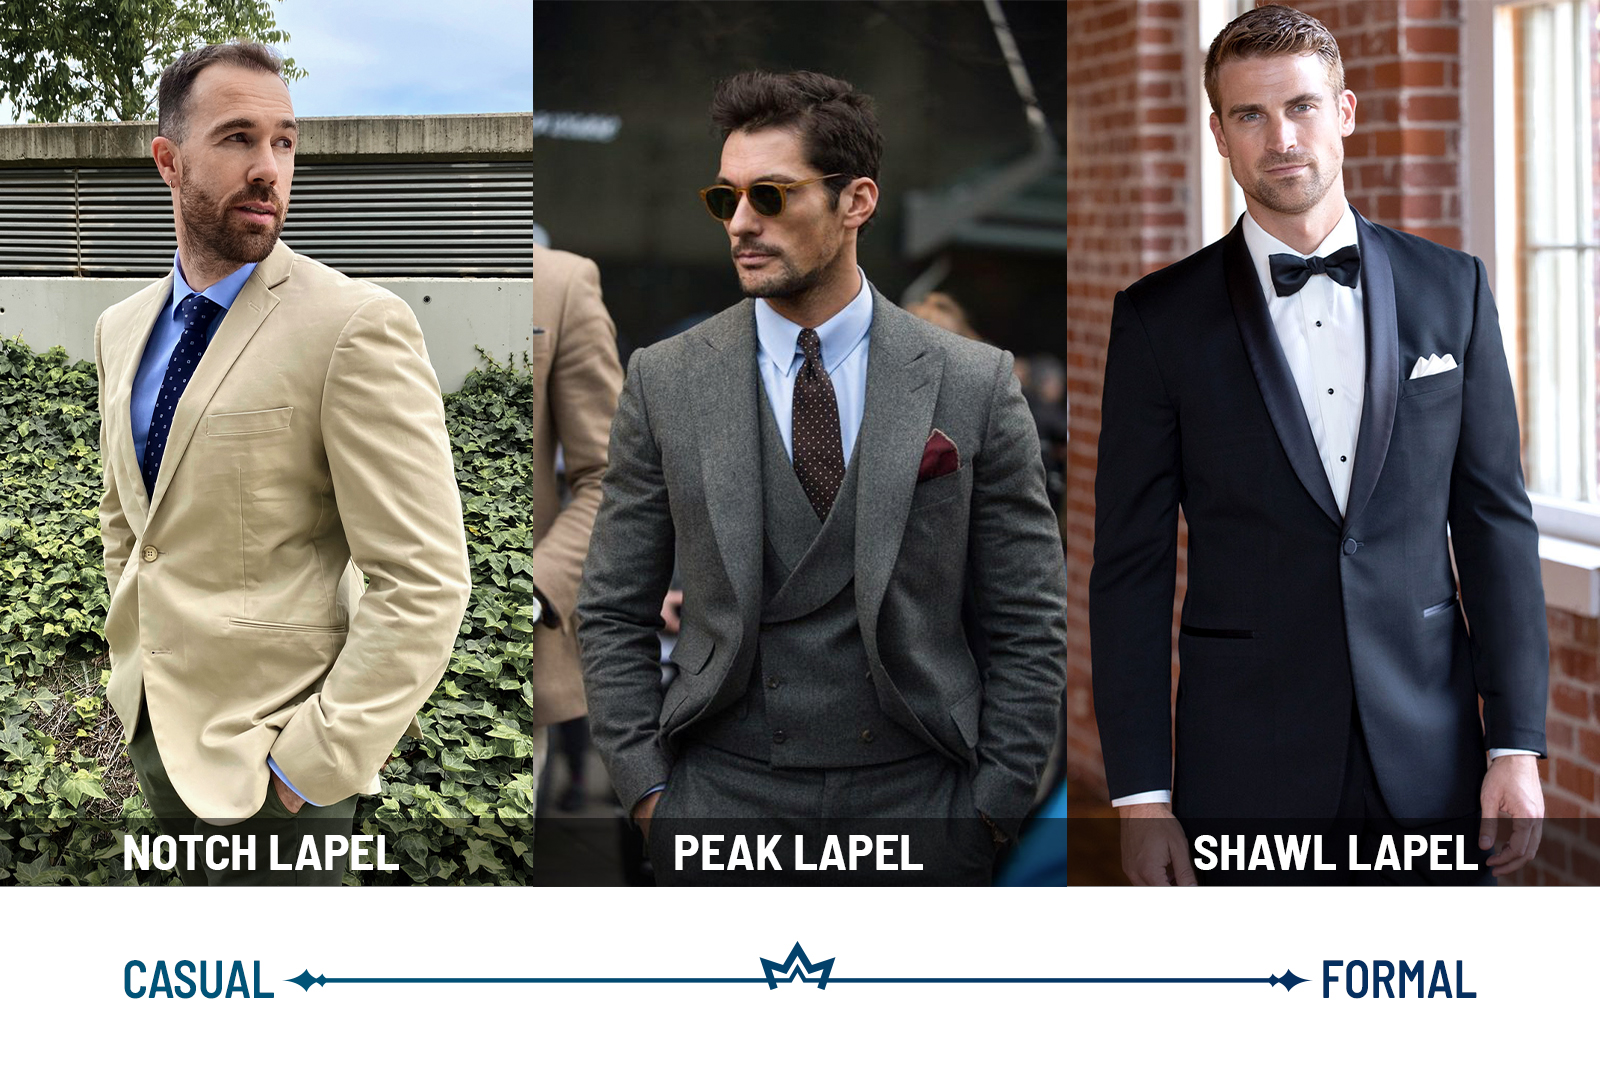 Notch vs. peak vs. shawl lapel suit formality